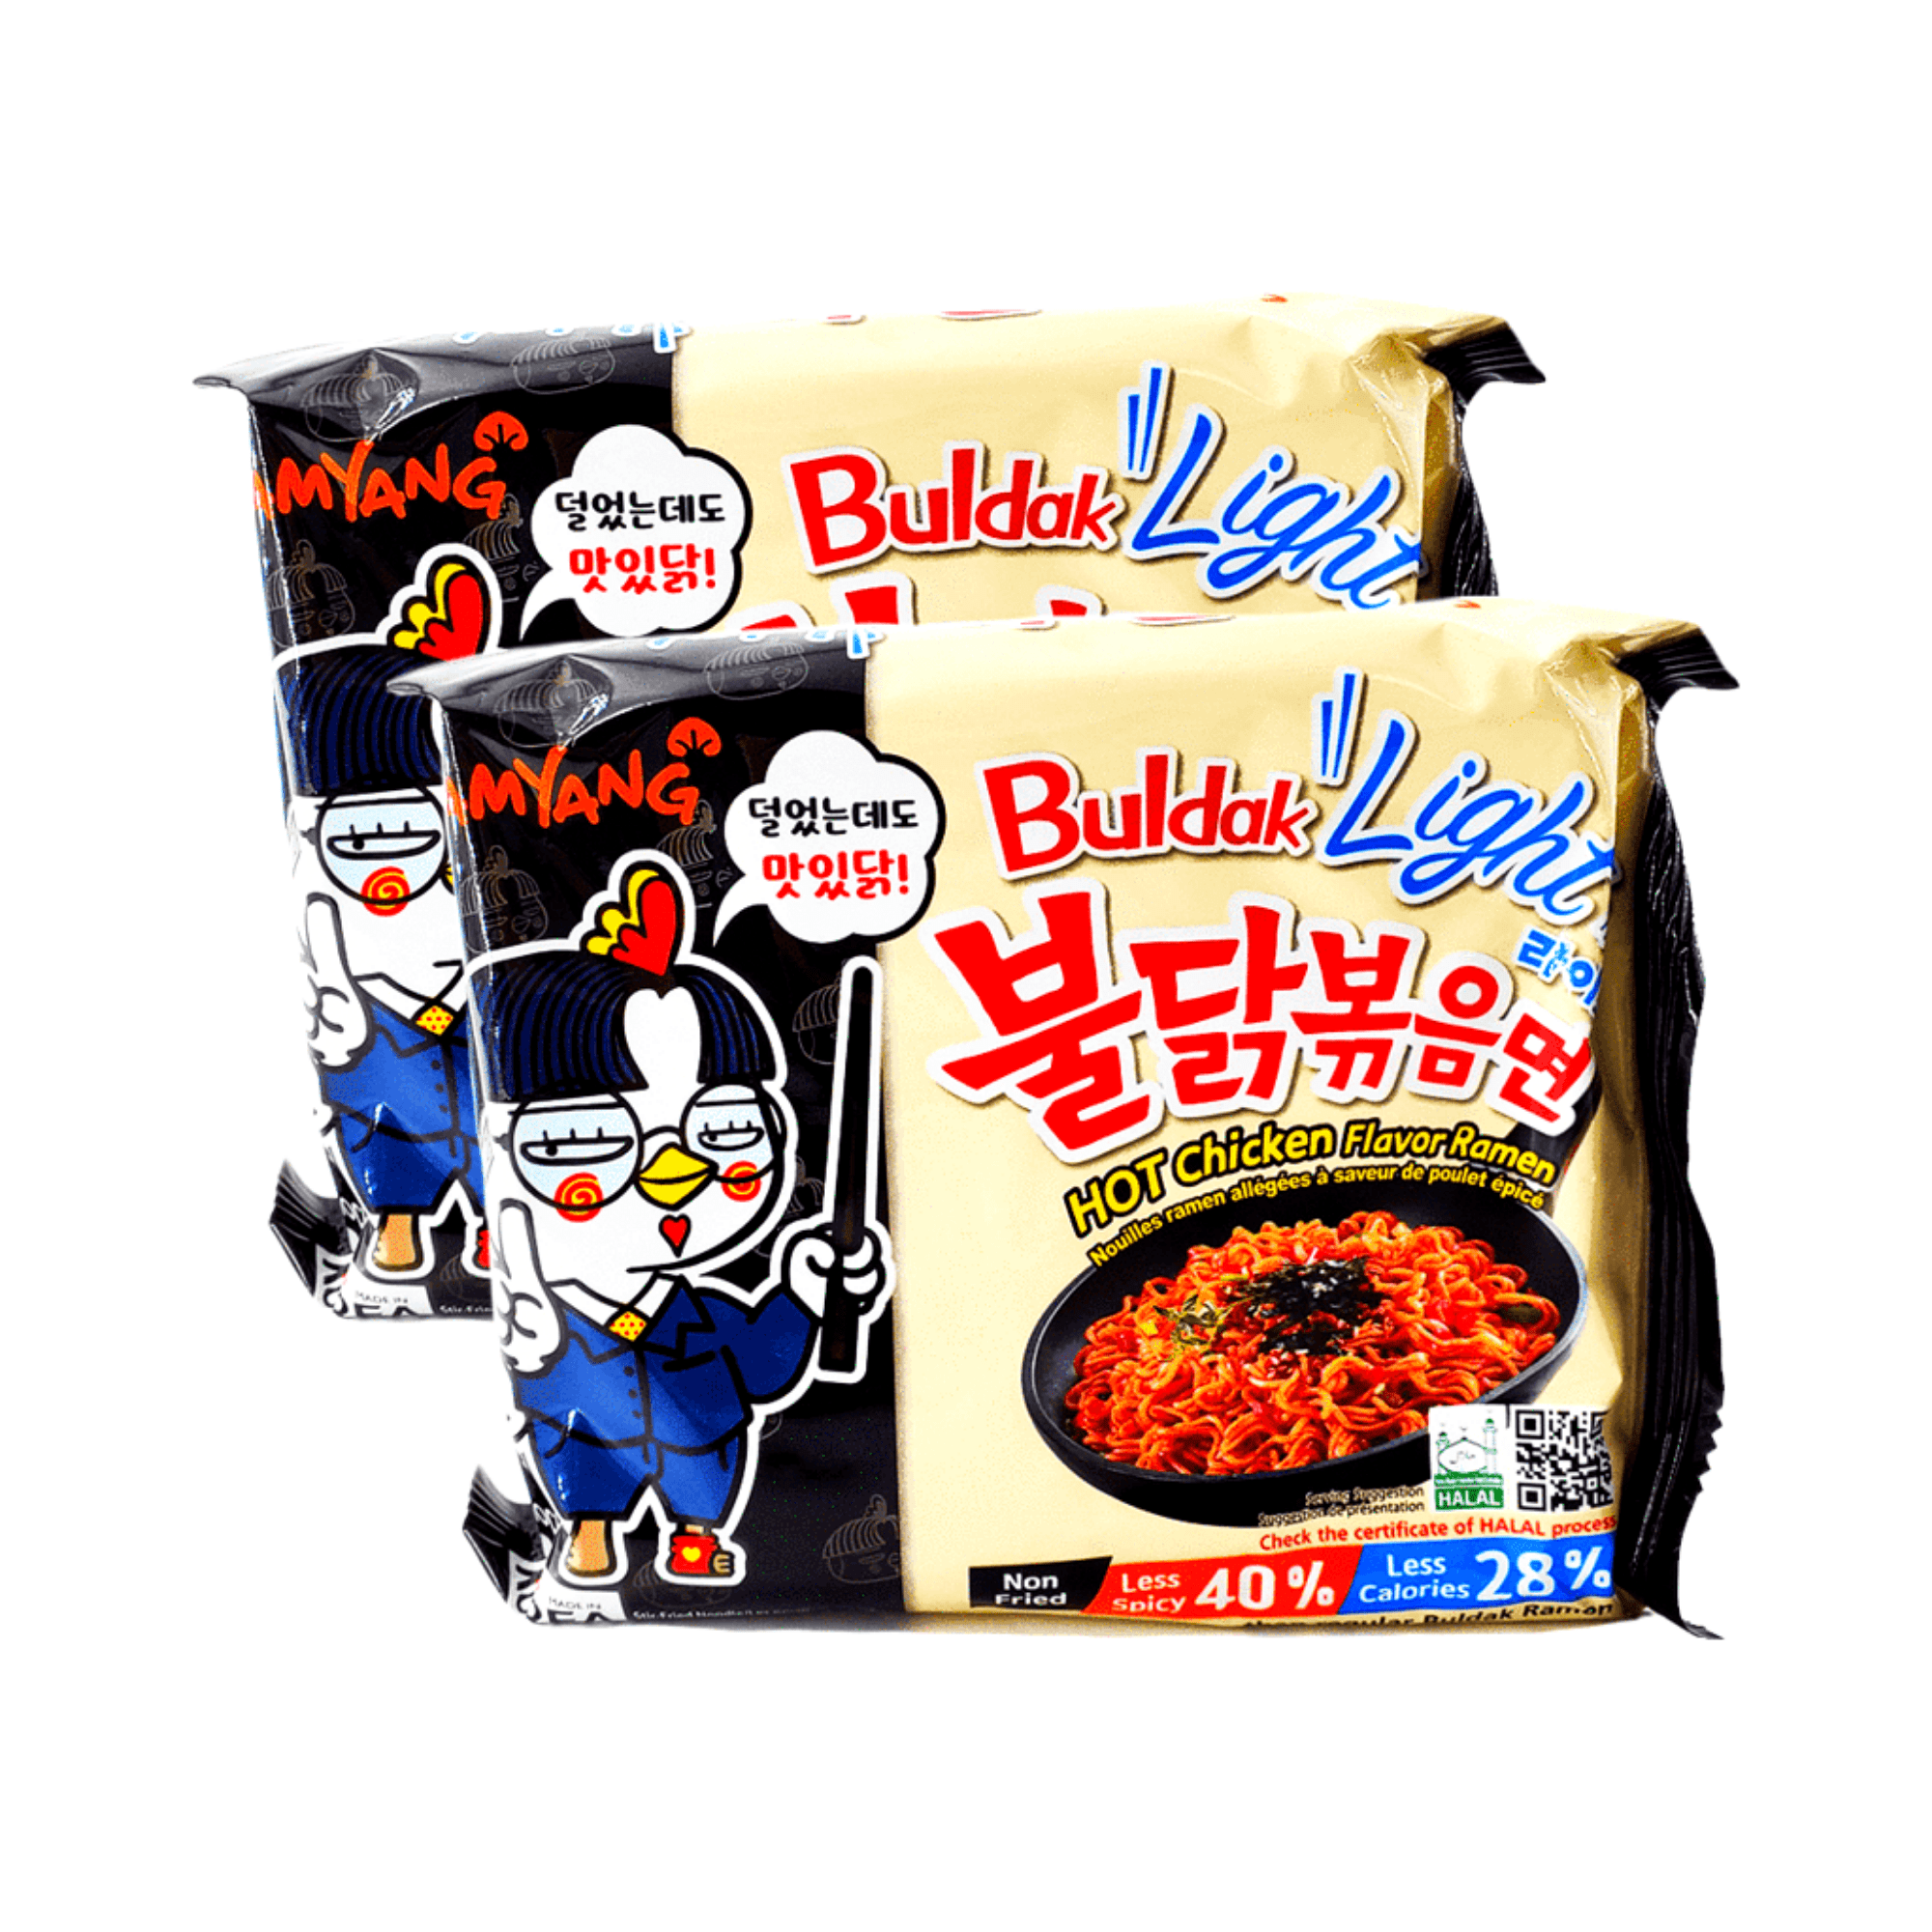 Samyang Buldak Light Hot Chicken Flavored Ramen 5-PACK 19.40 Oz g) - Walmart.com